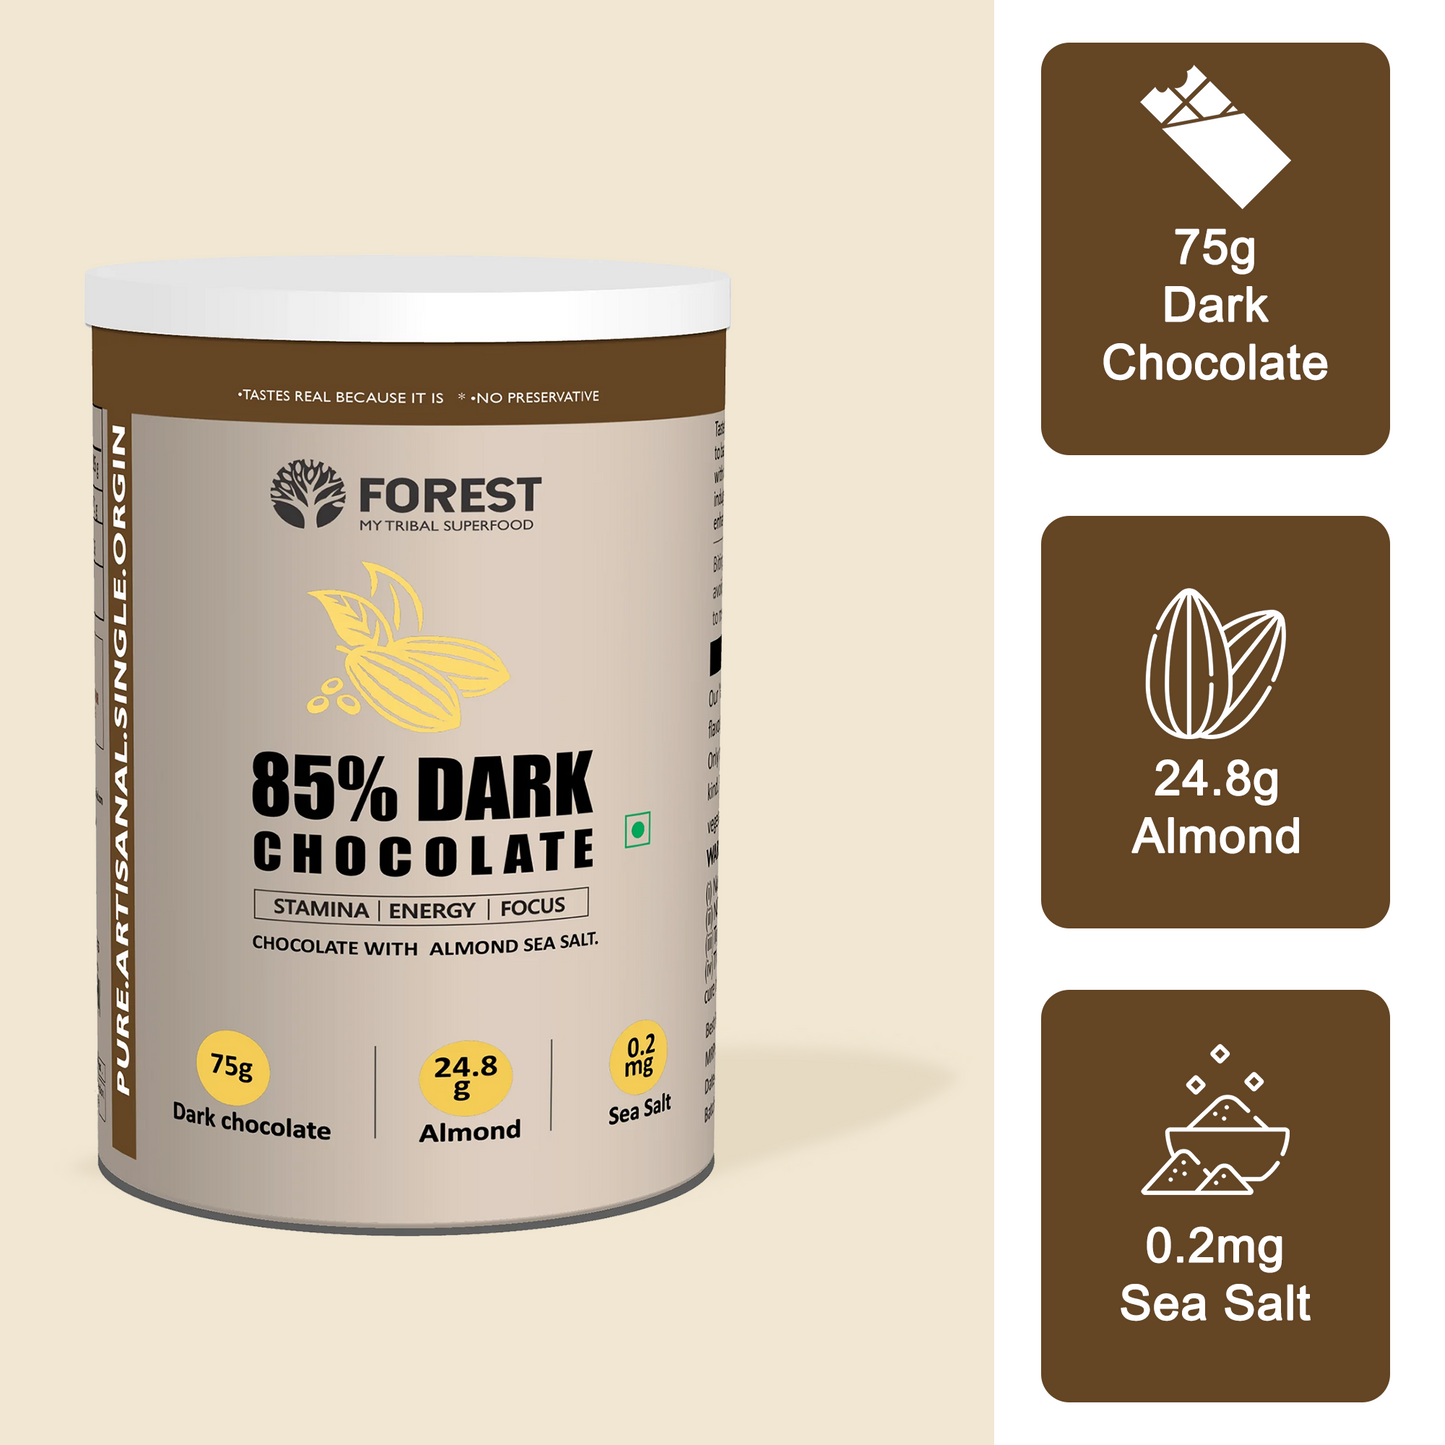 Dark Chocolate with Almond Sea Salt - 85% dark chocolate